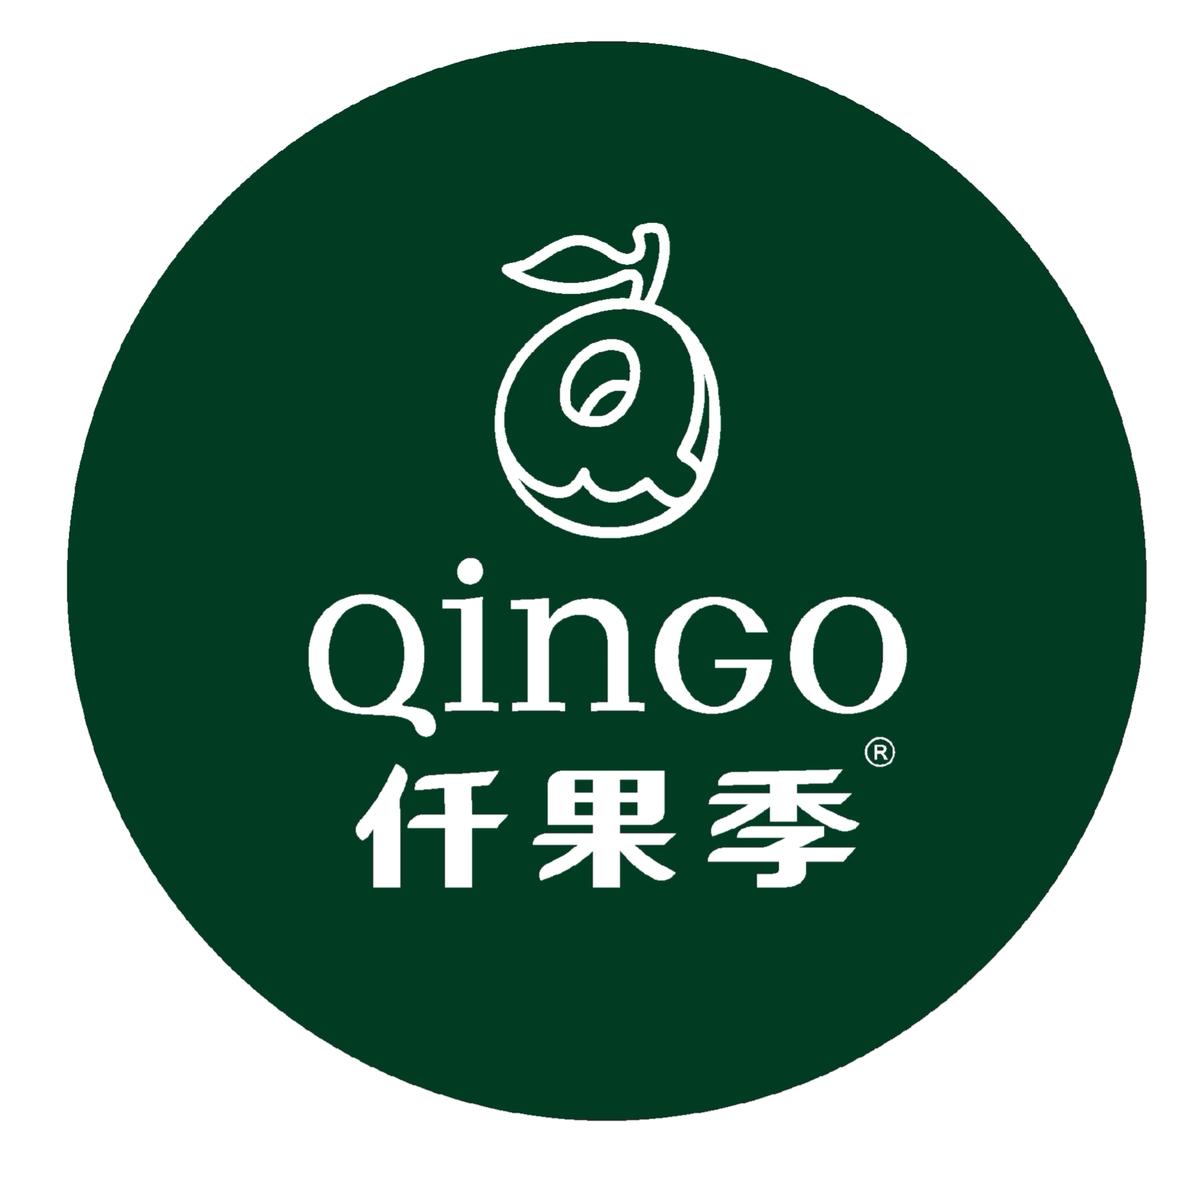 Qingo Singapore